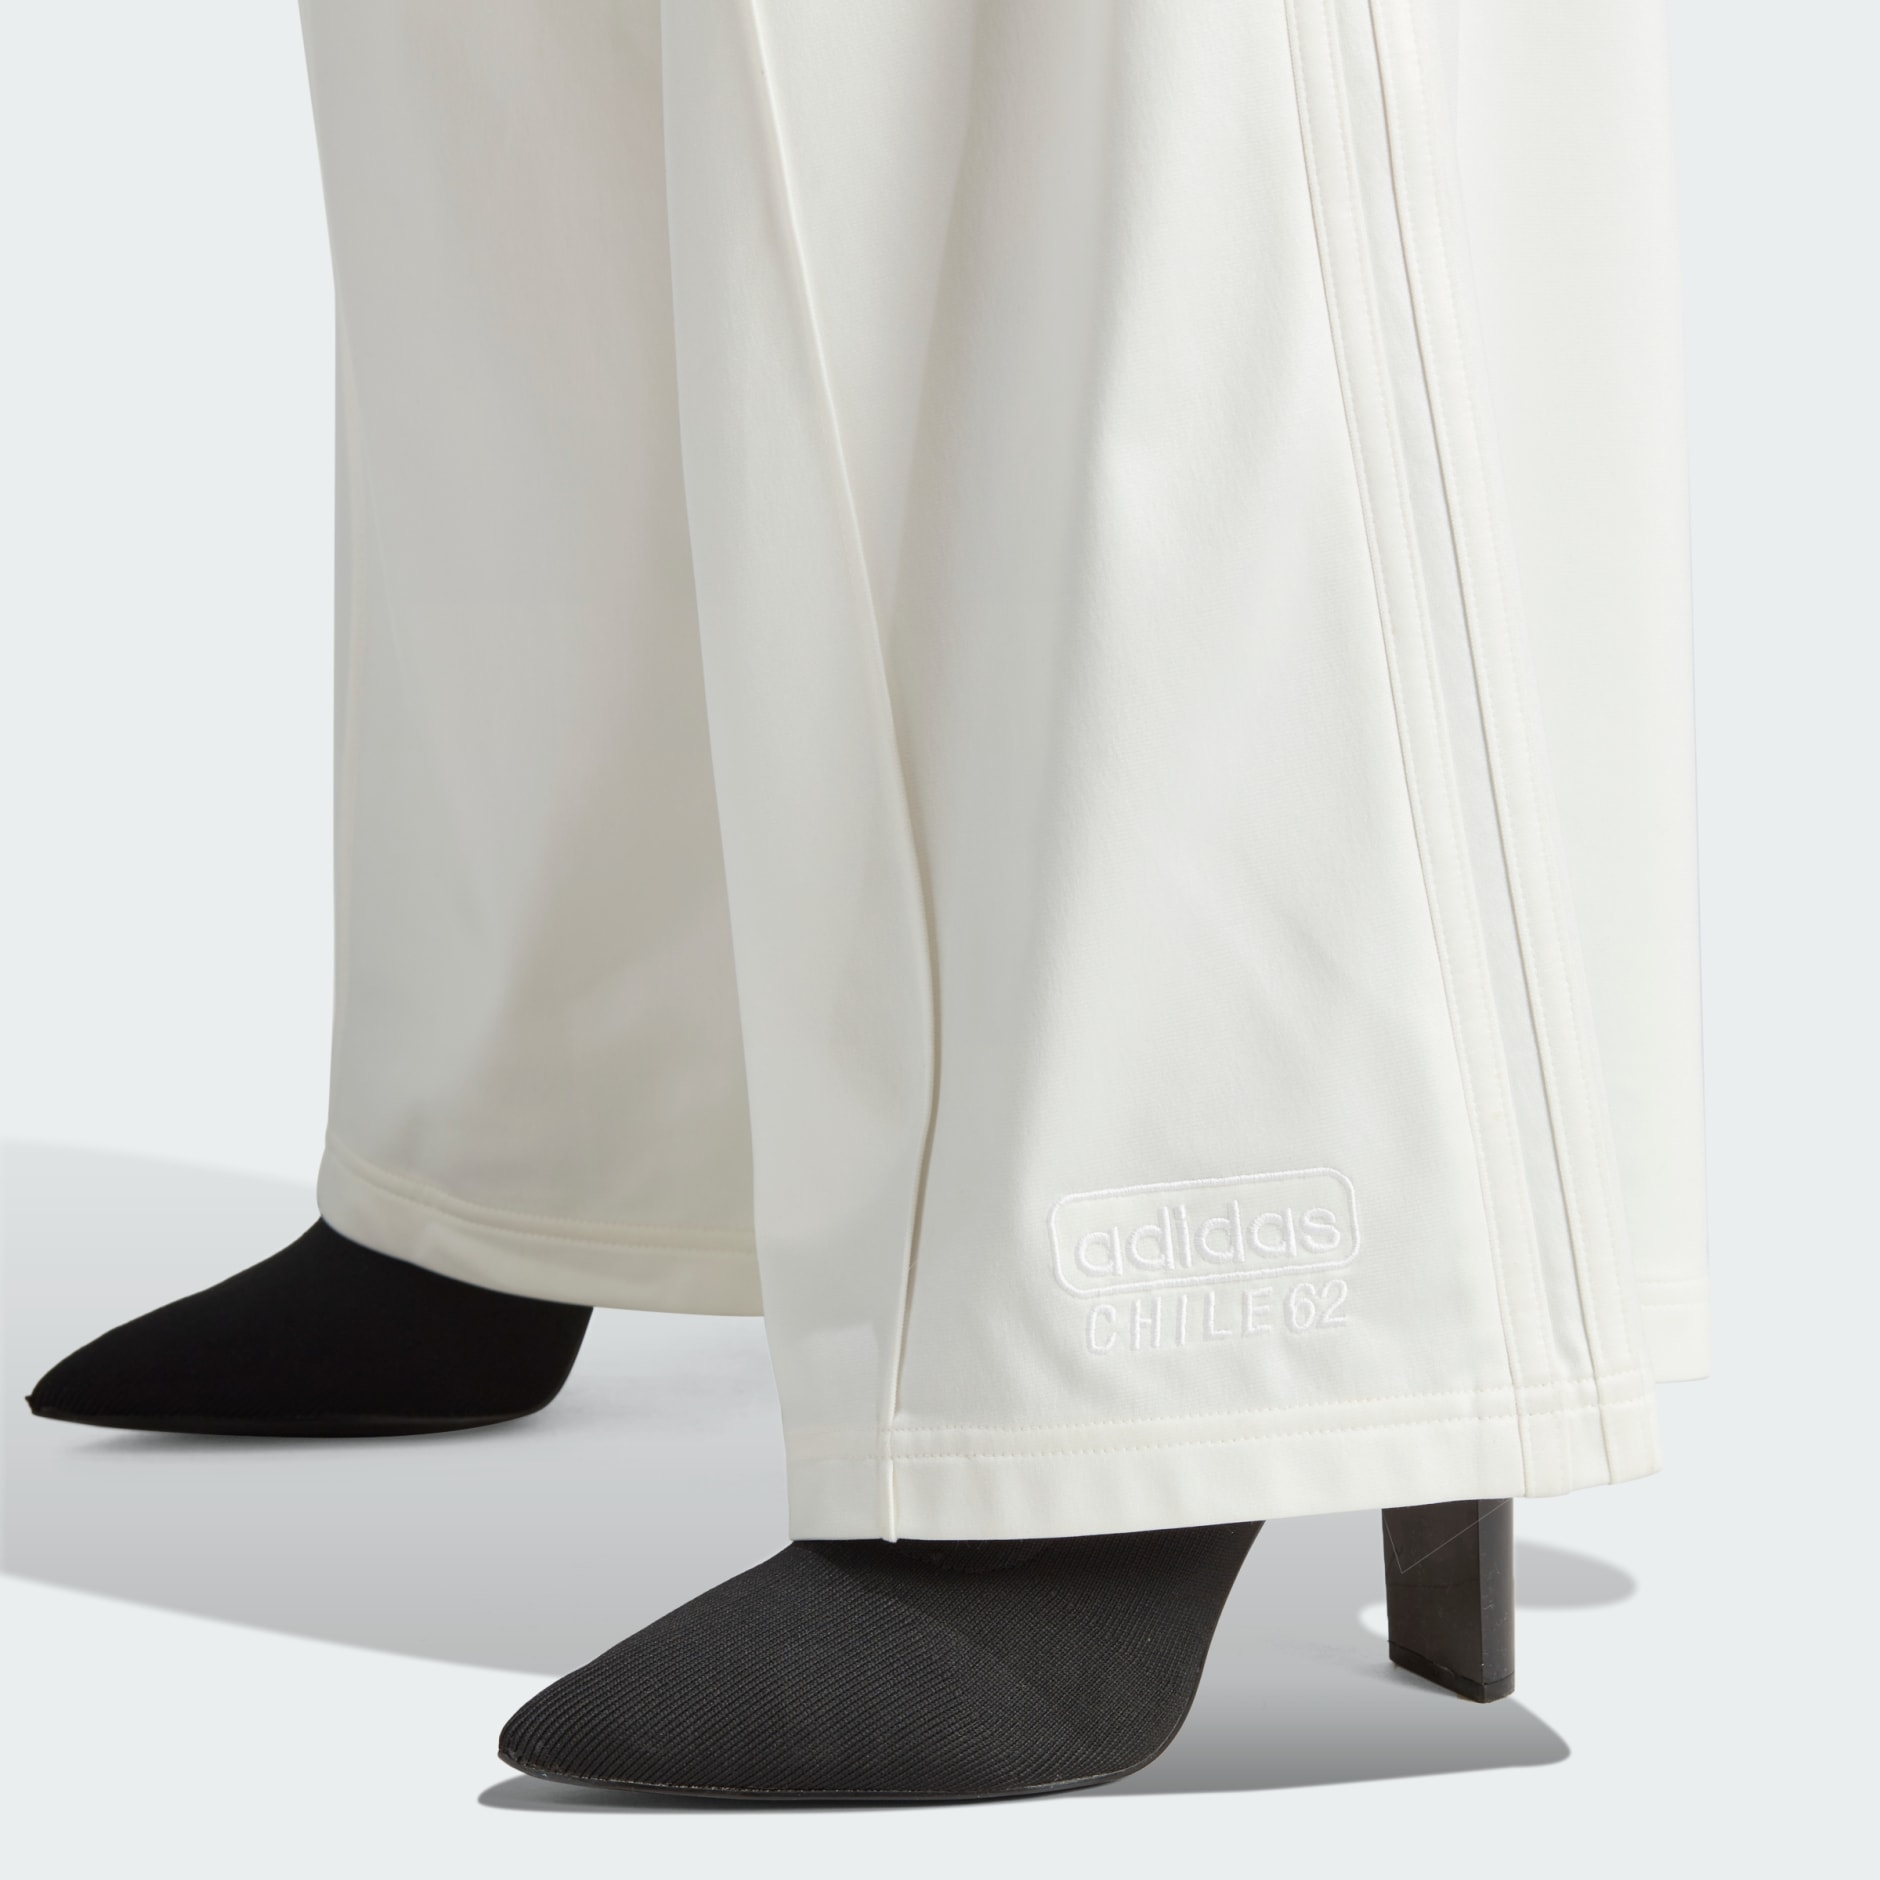 Adidas ADI-FIGHTER Pants TKD Kyorugi Uniform Super Light Weight Trousers WT  | eBay